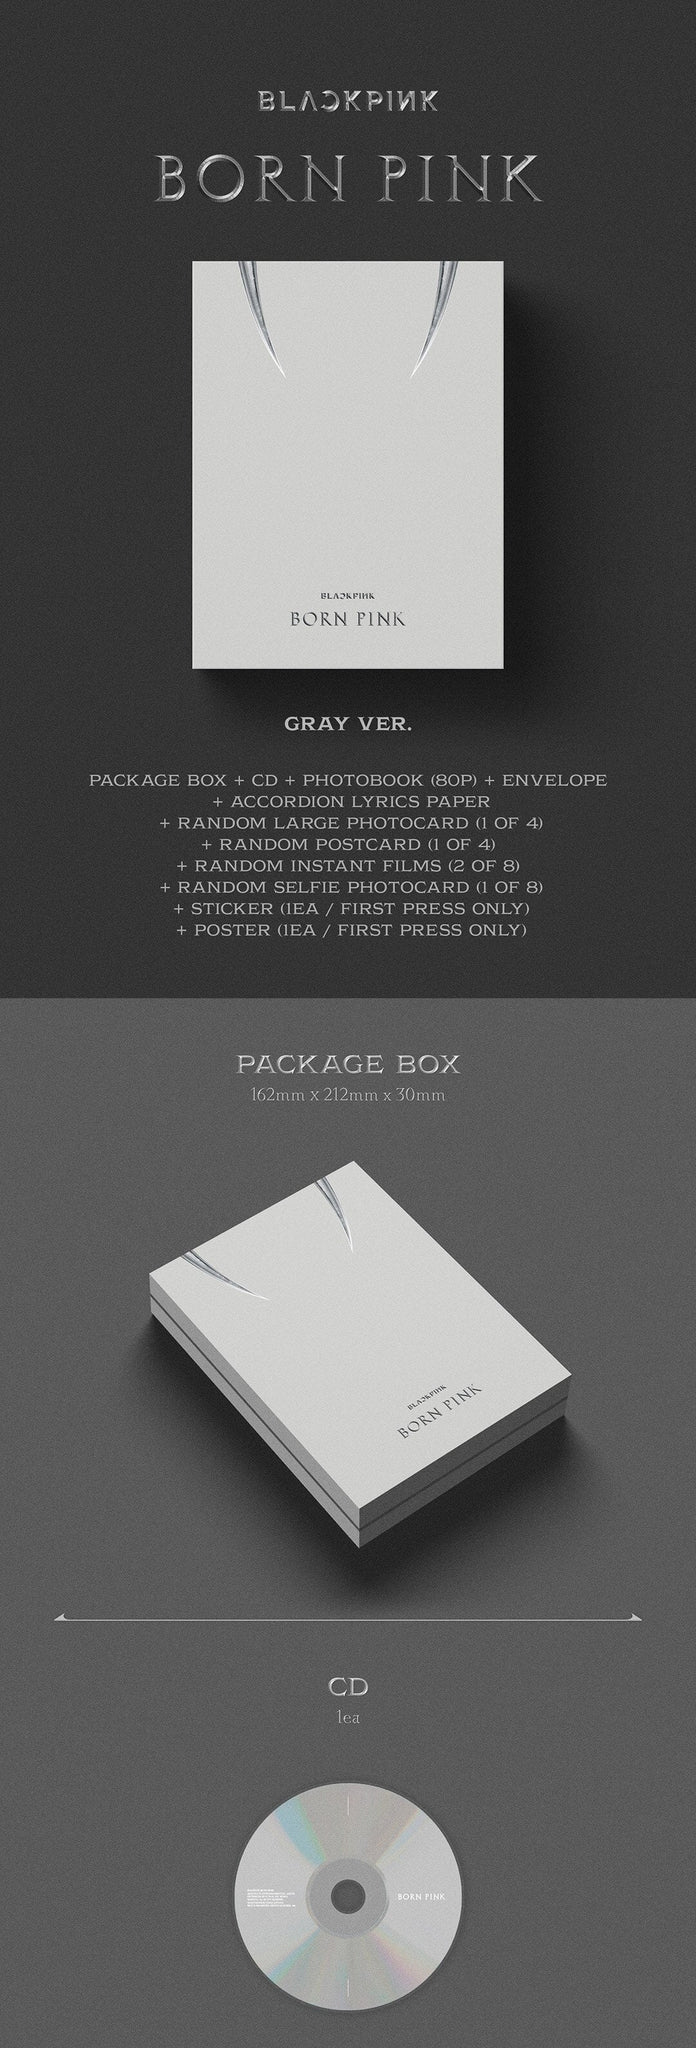 BLACKPINK BORN PINK BOX SET GRAY Version Album Info Inclusions Package Box CD